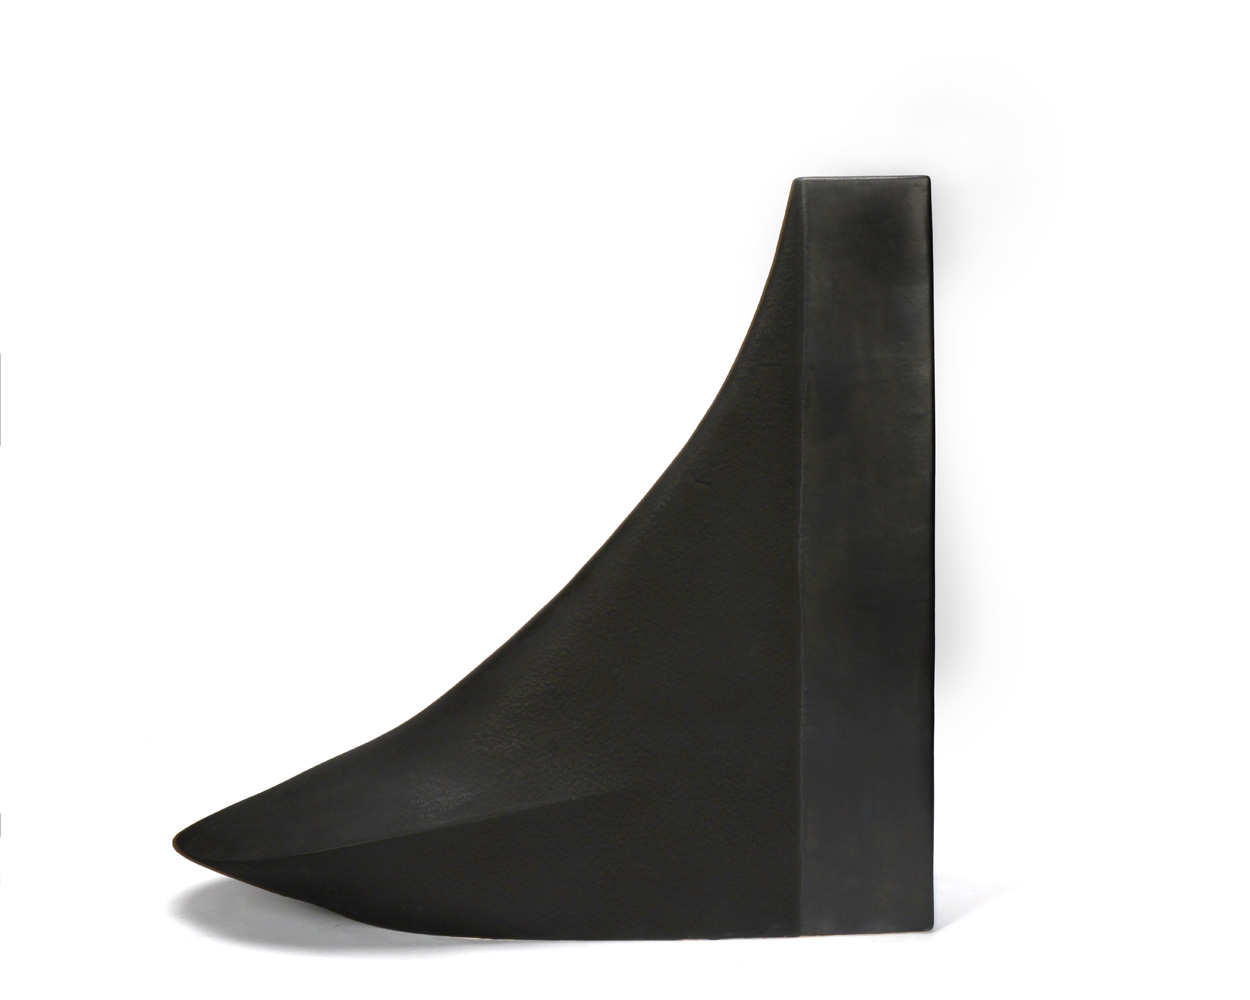 
		                					James Marshall 		                																	
																											<i>Untitled Black #505,</i>  
																																								2017, 
																																								ceramic, 
																																								32 x 34 x 11 inches  
																								
		                				